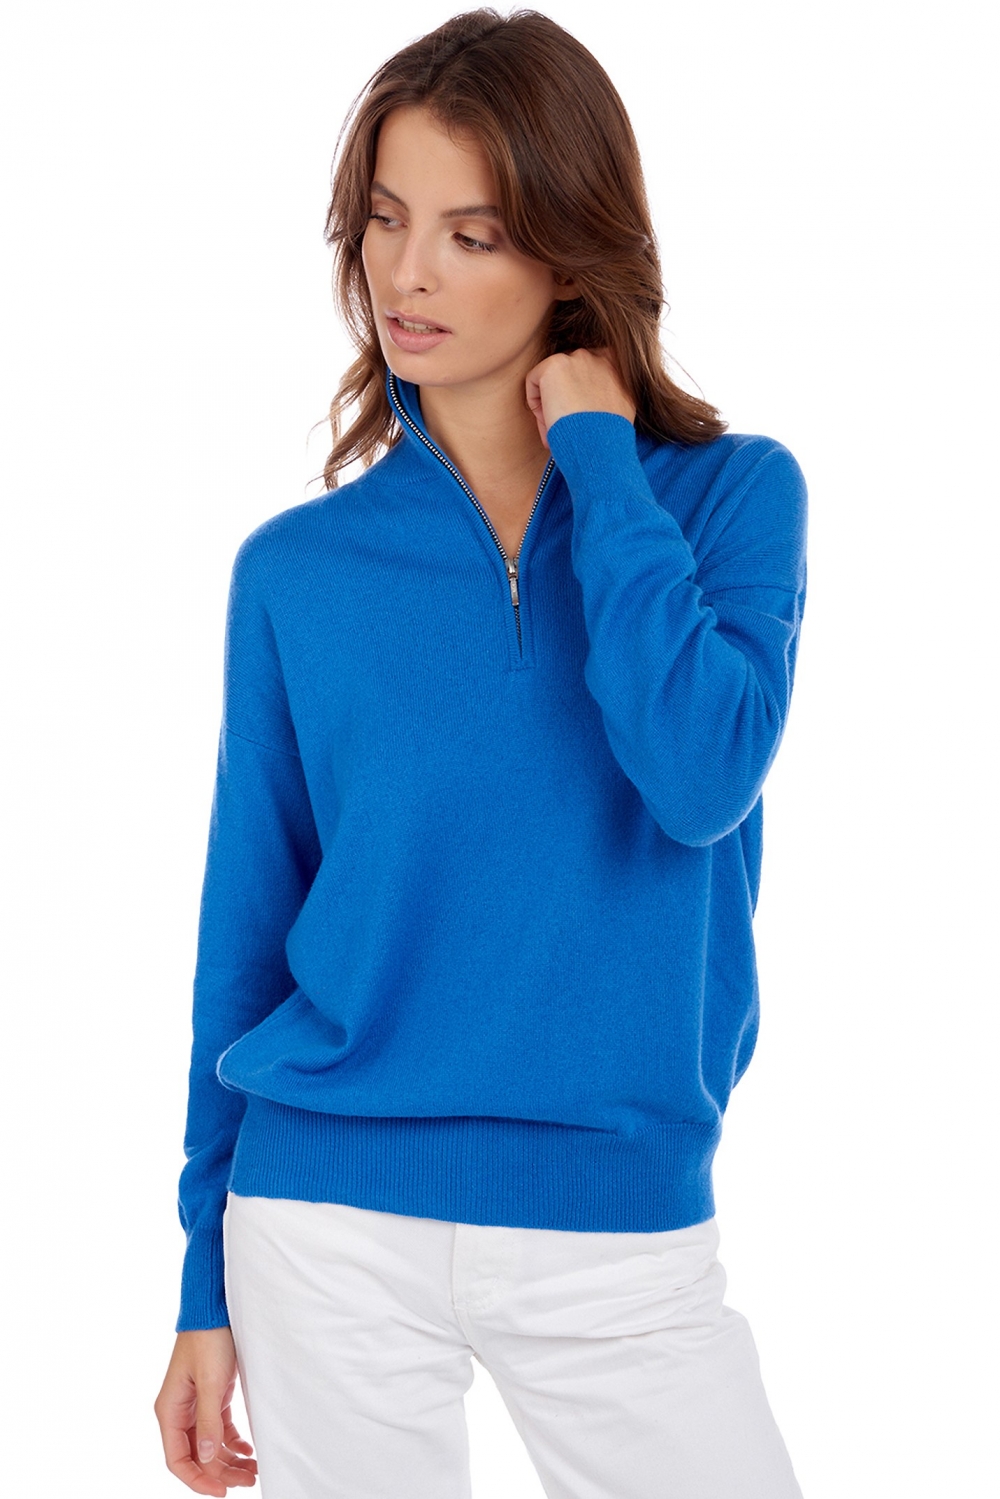 Cashmere ladies our full range of women s sweaters groseille tetbury blue xl